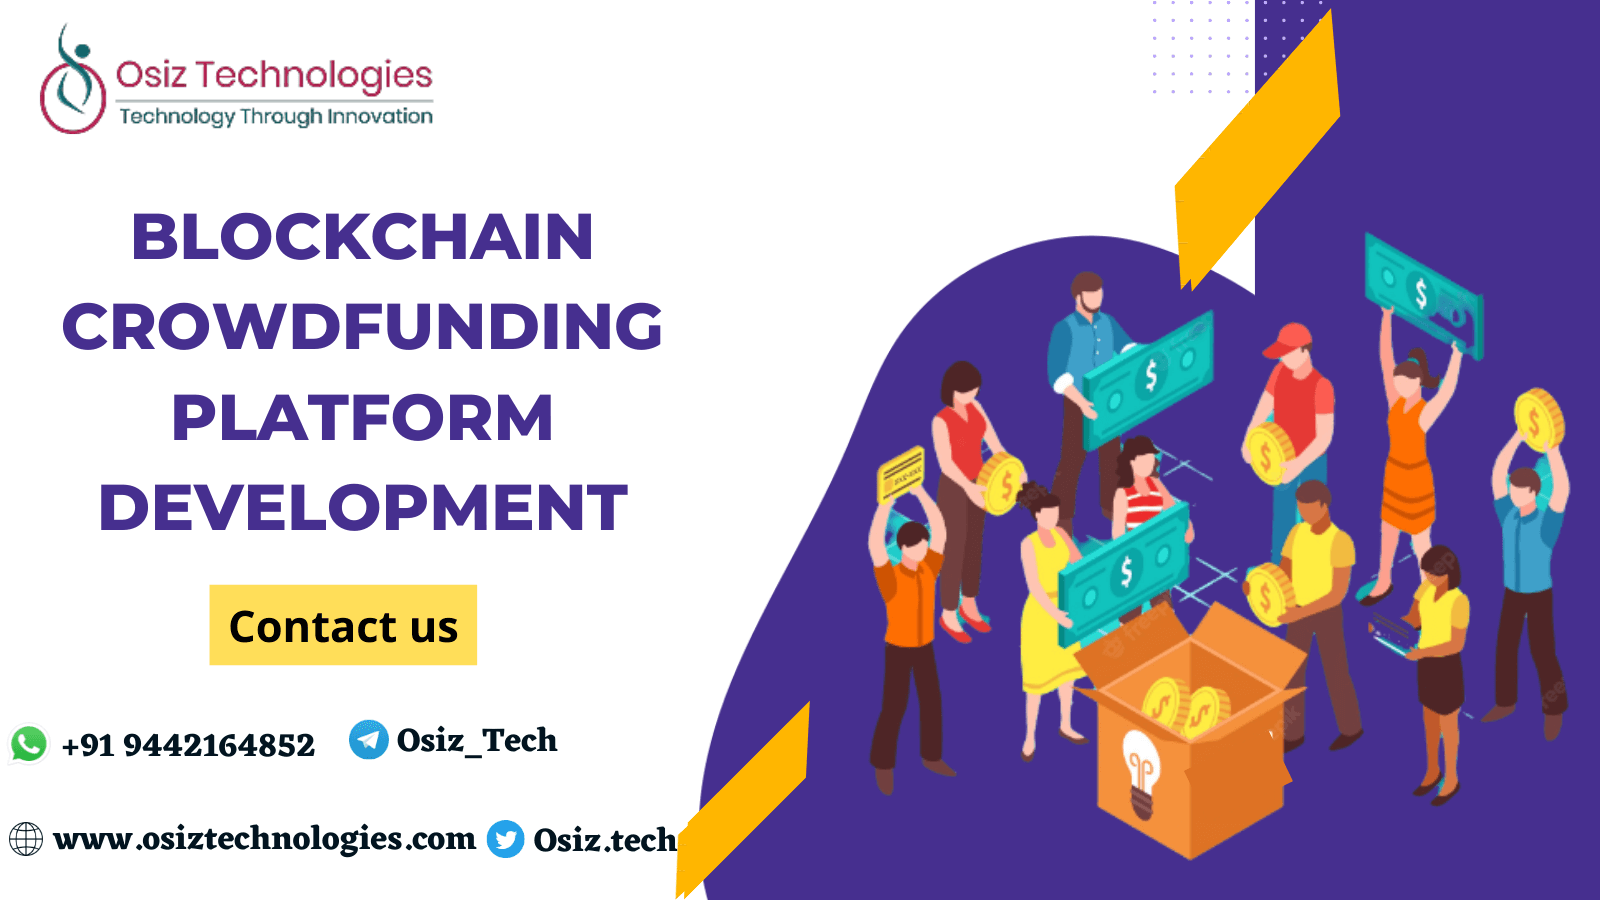 Blockchain Crowdfunding Development Company - Osiz Technologies